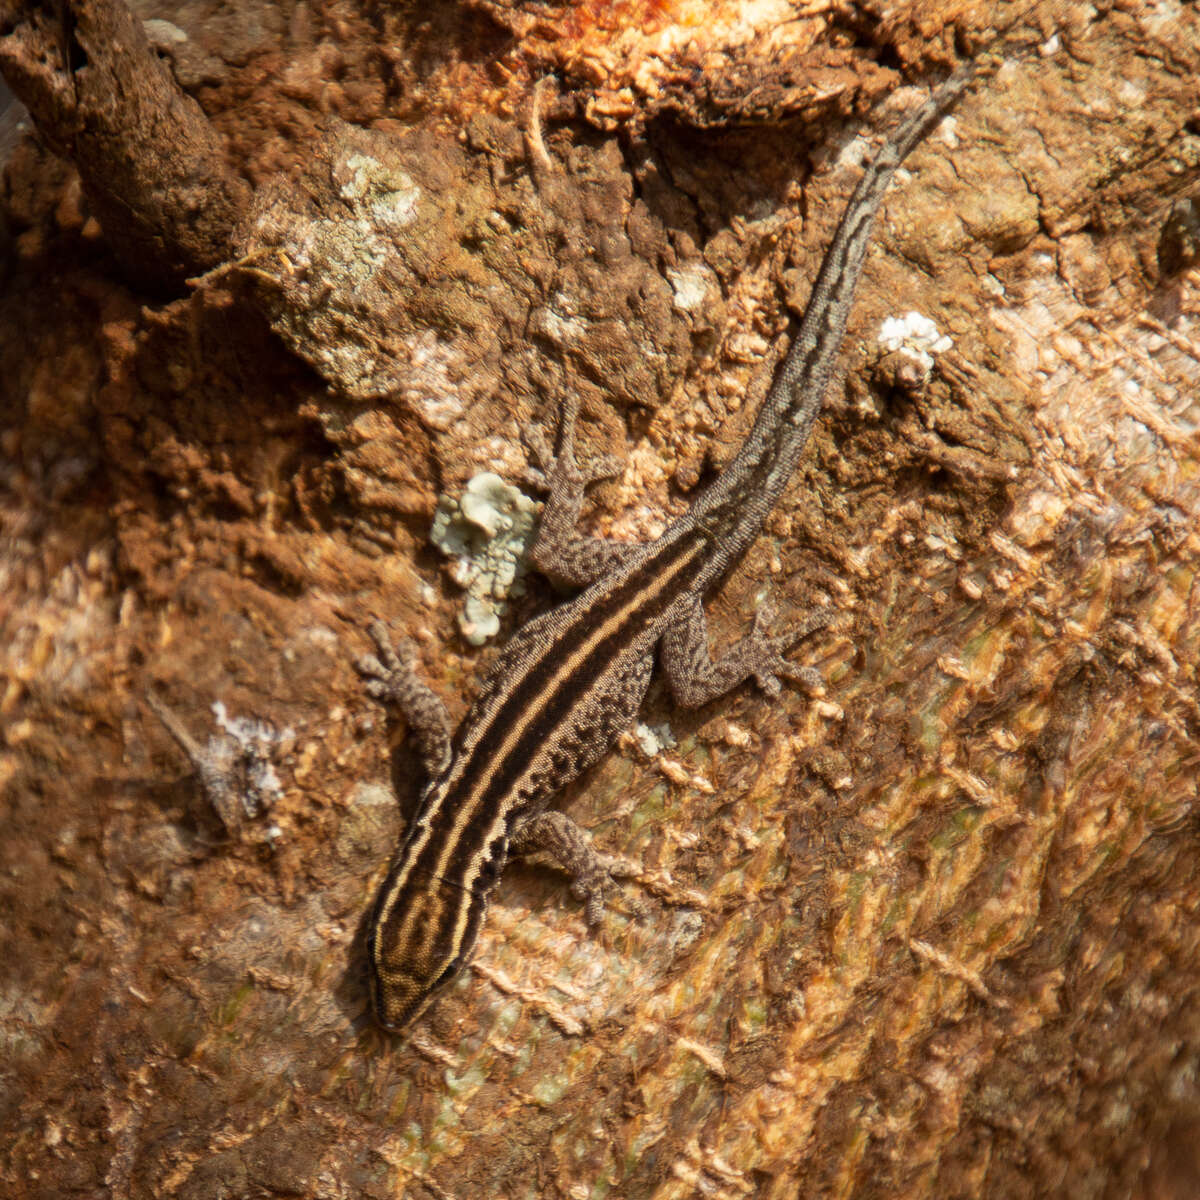 Image of Lygodactylus tsavoensis Malonza, Bauer, Granthon, Williams & Wojnowski 2019